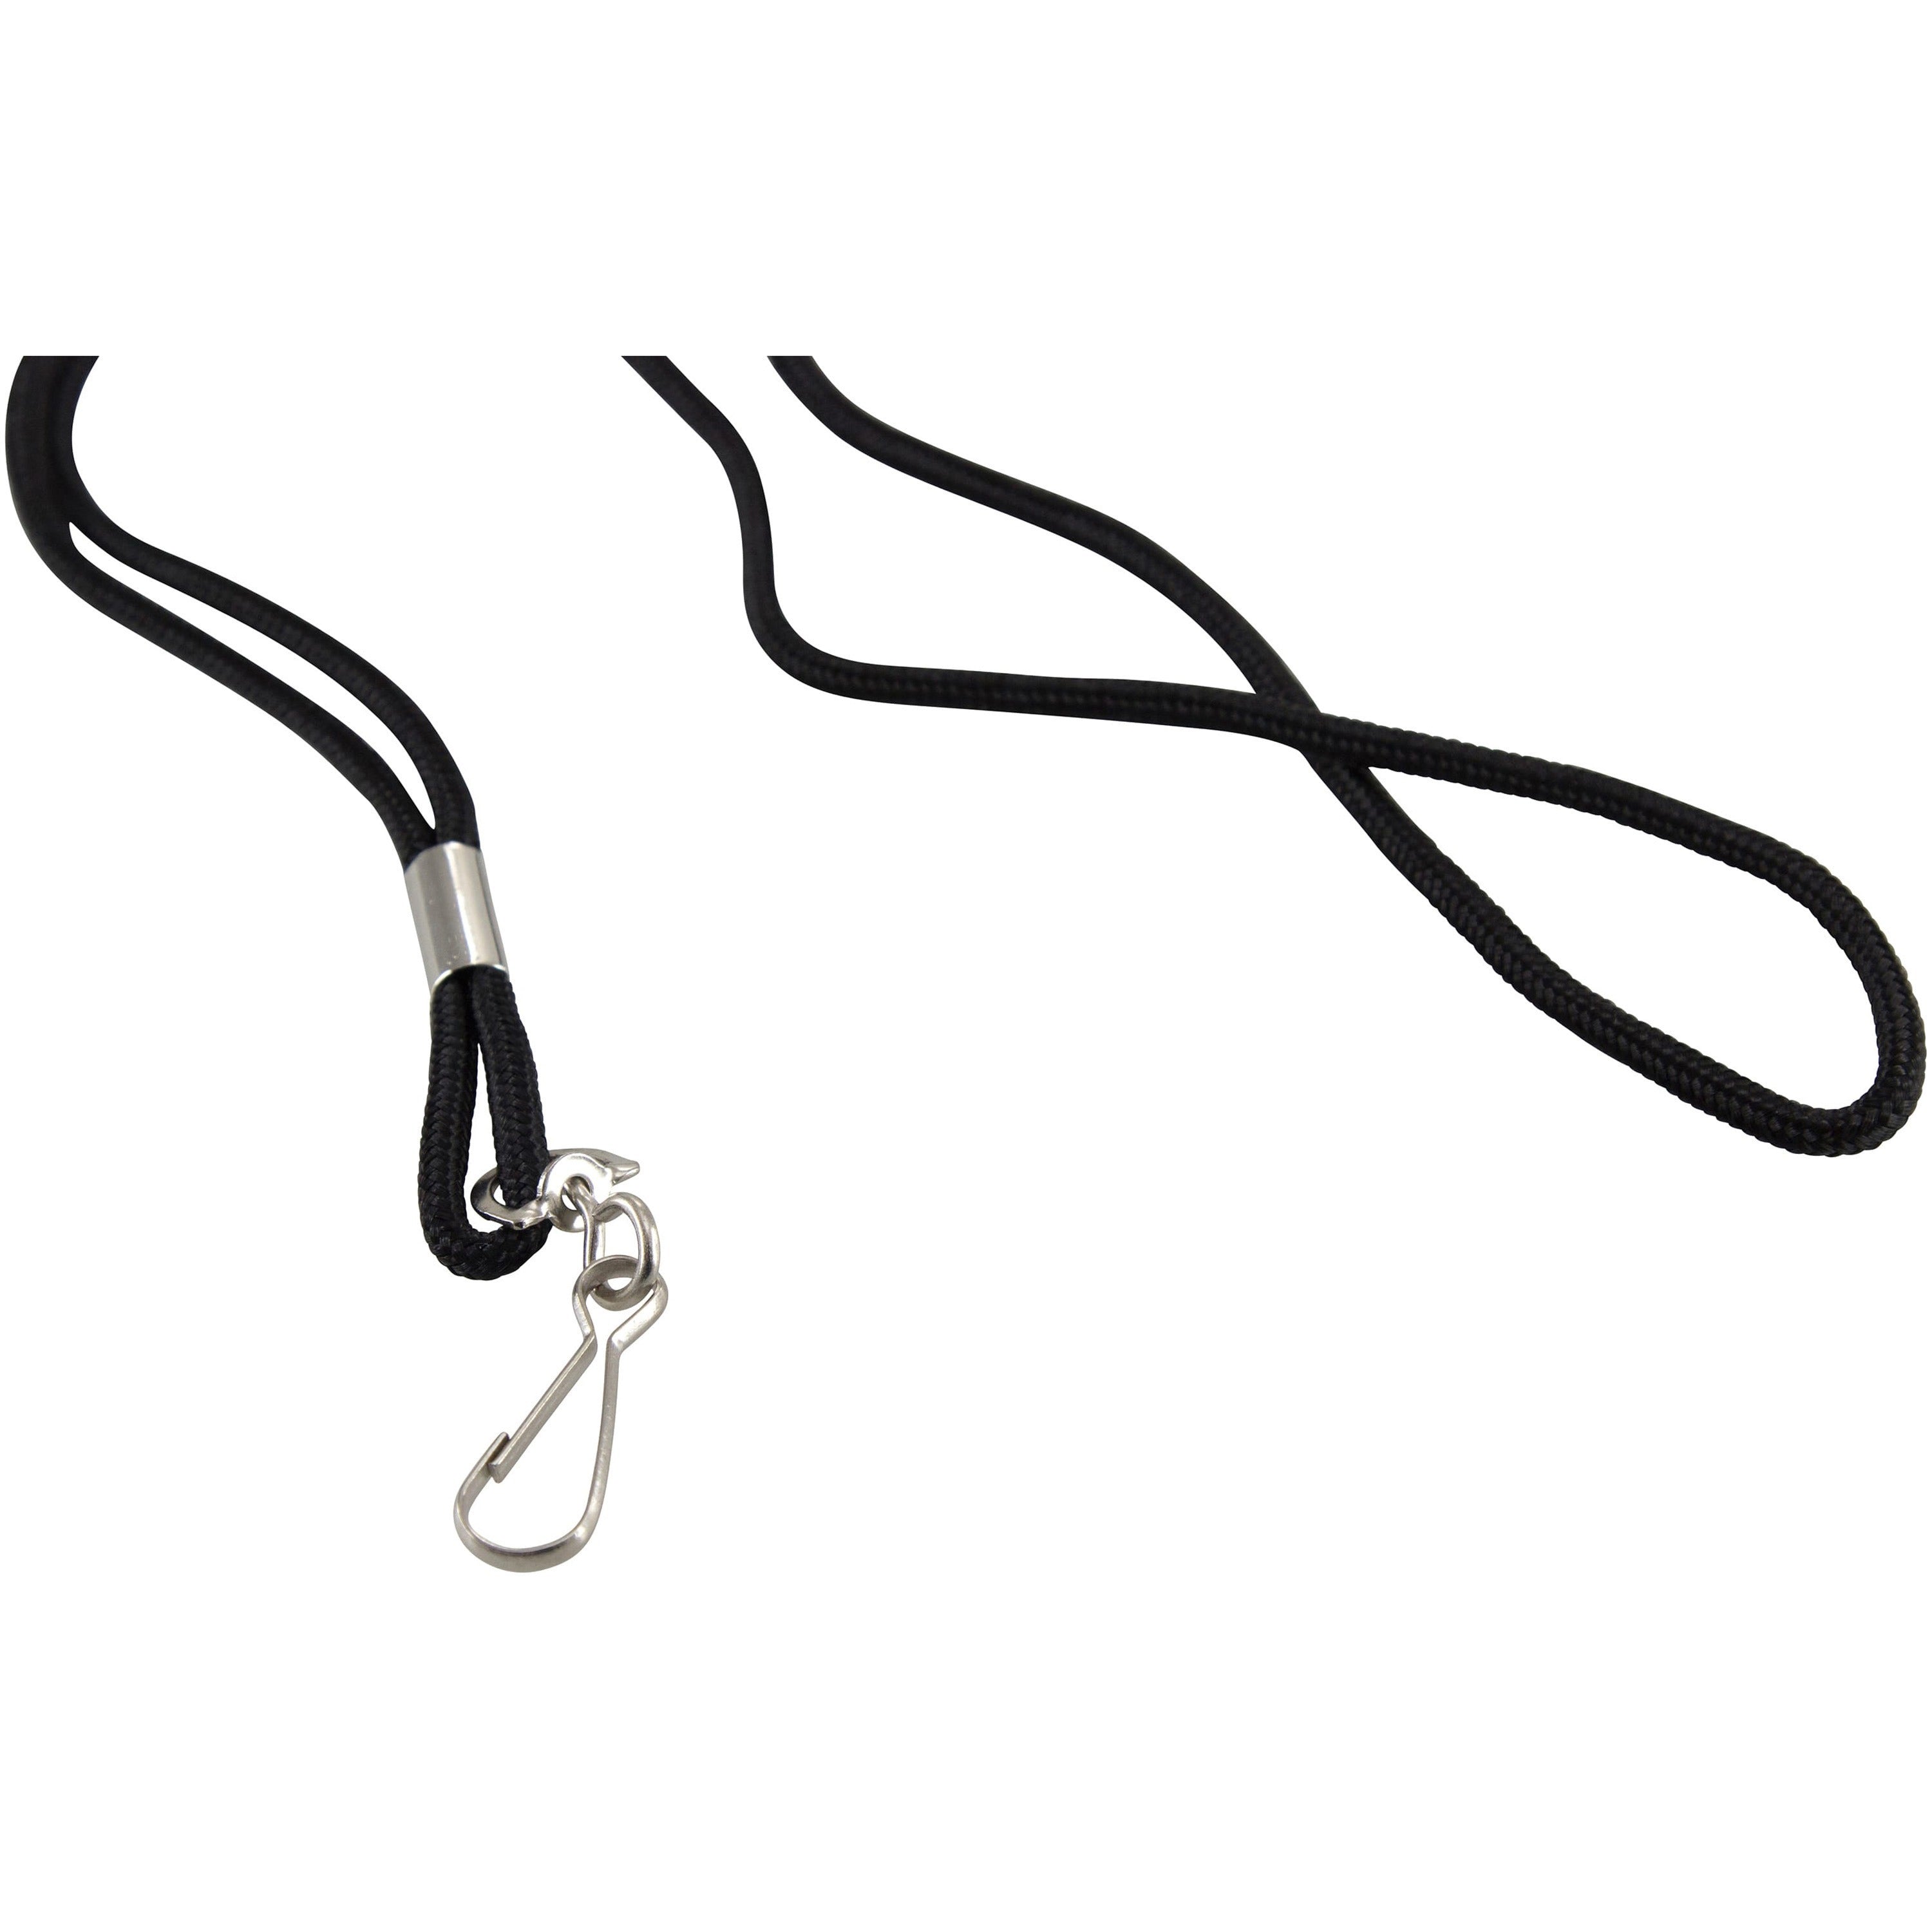 SICURIX Standard Rope Lanyard - 12 / Pack - 36" Length - Black - Nylon - 